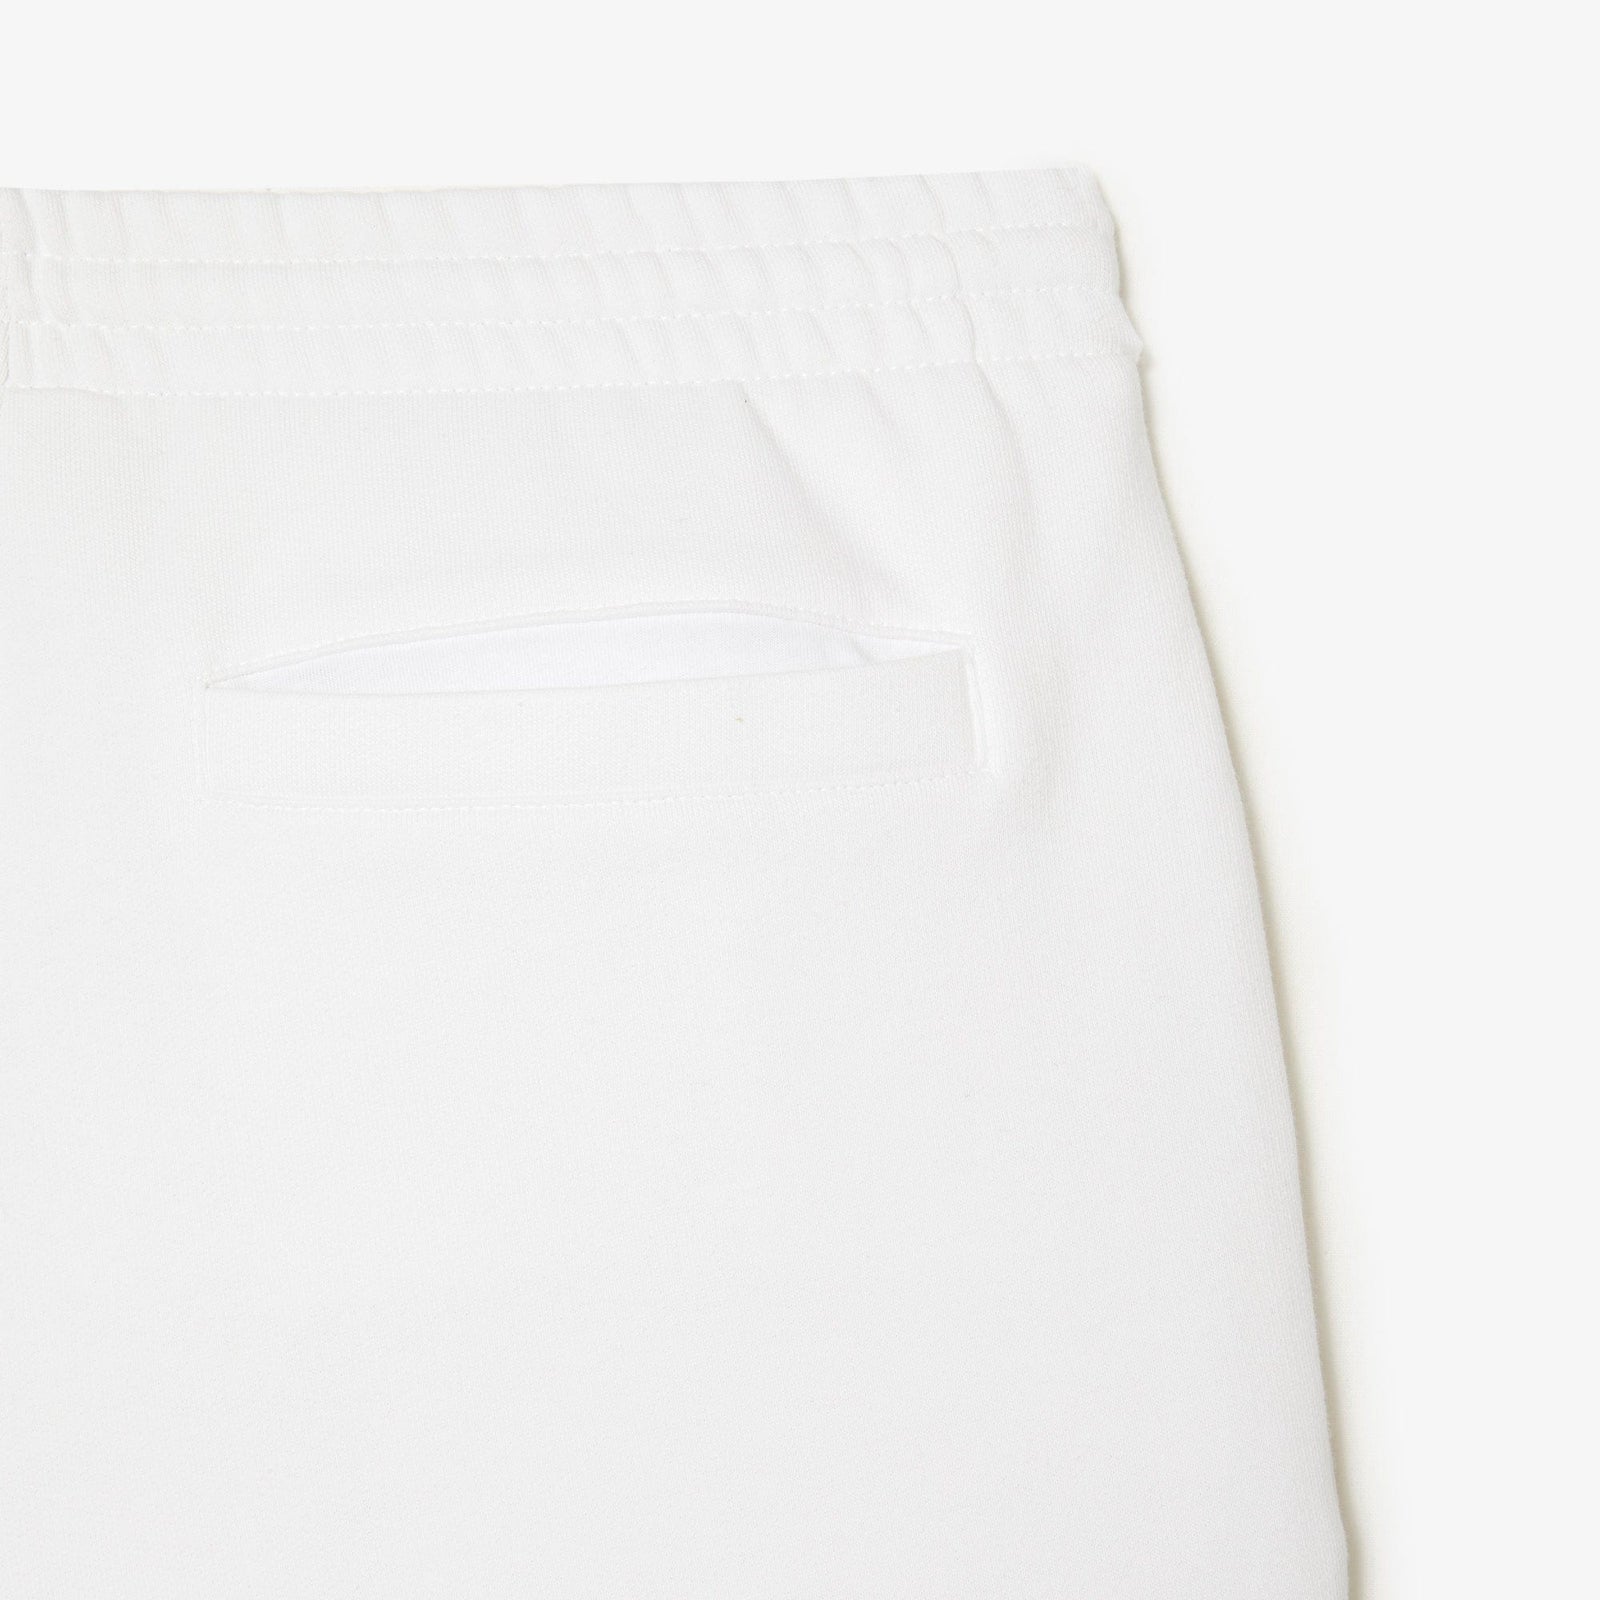 Lacoste Fleece Jogger Shorts in White